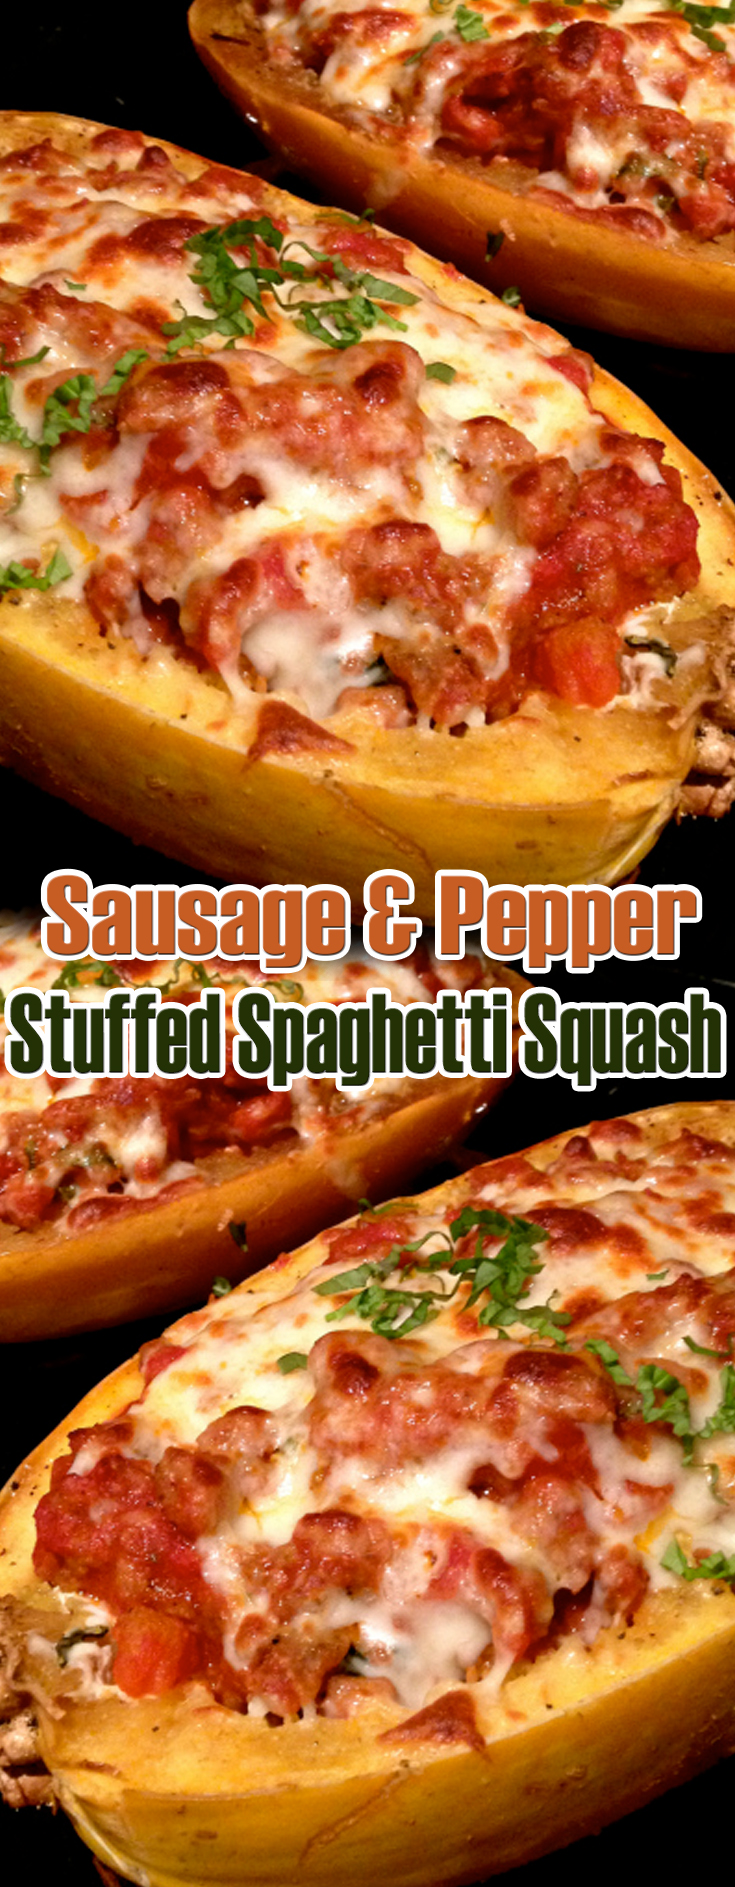 Sausage Pepper Stuffed Spaghetti Squash